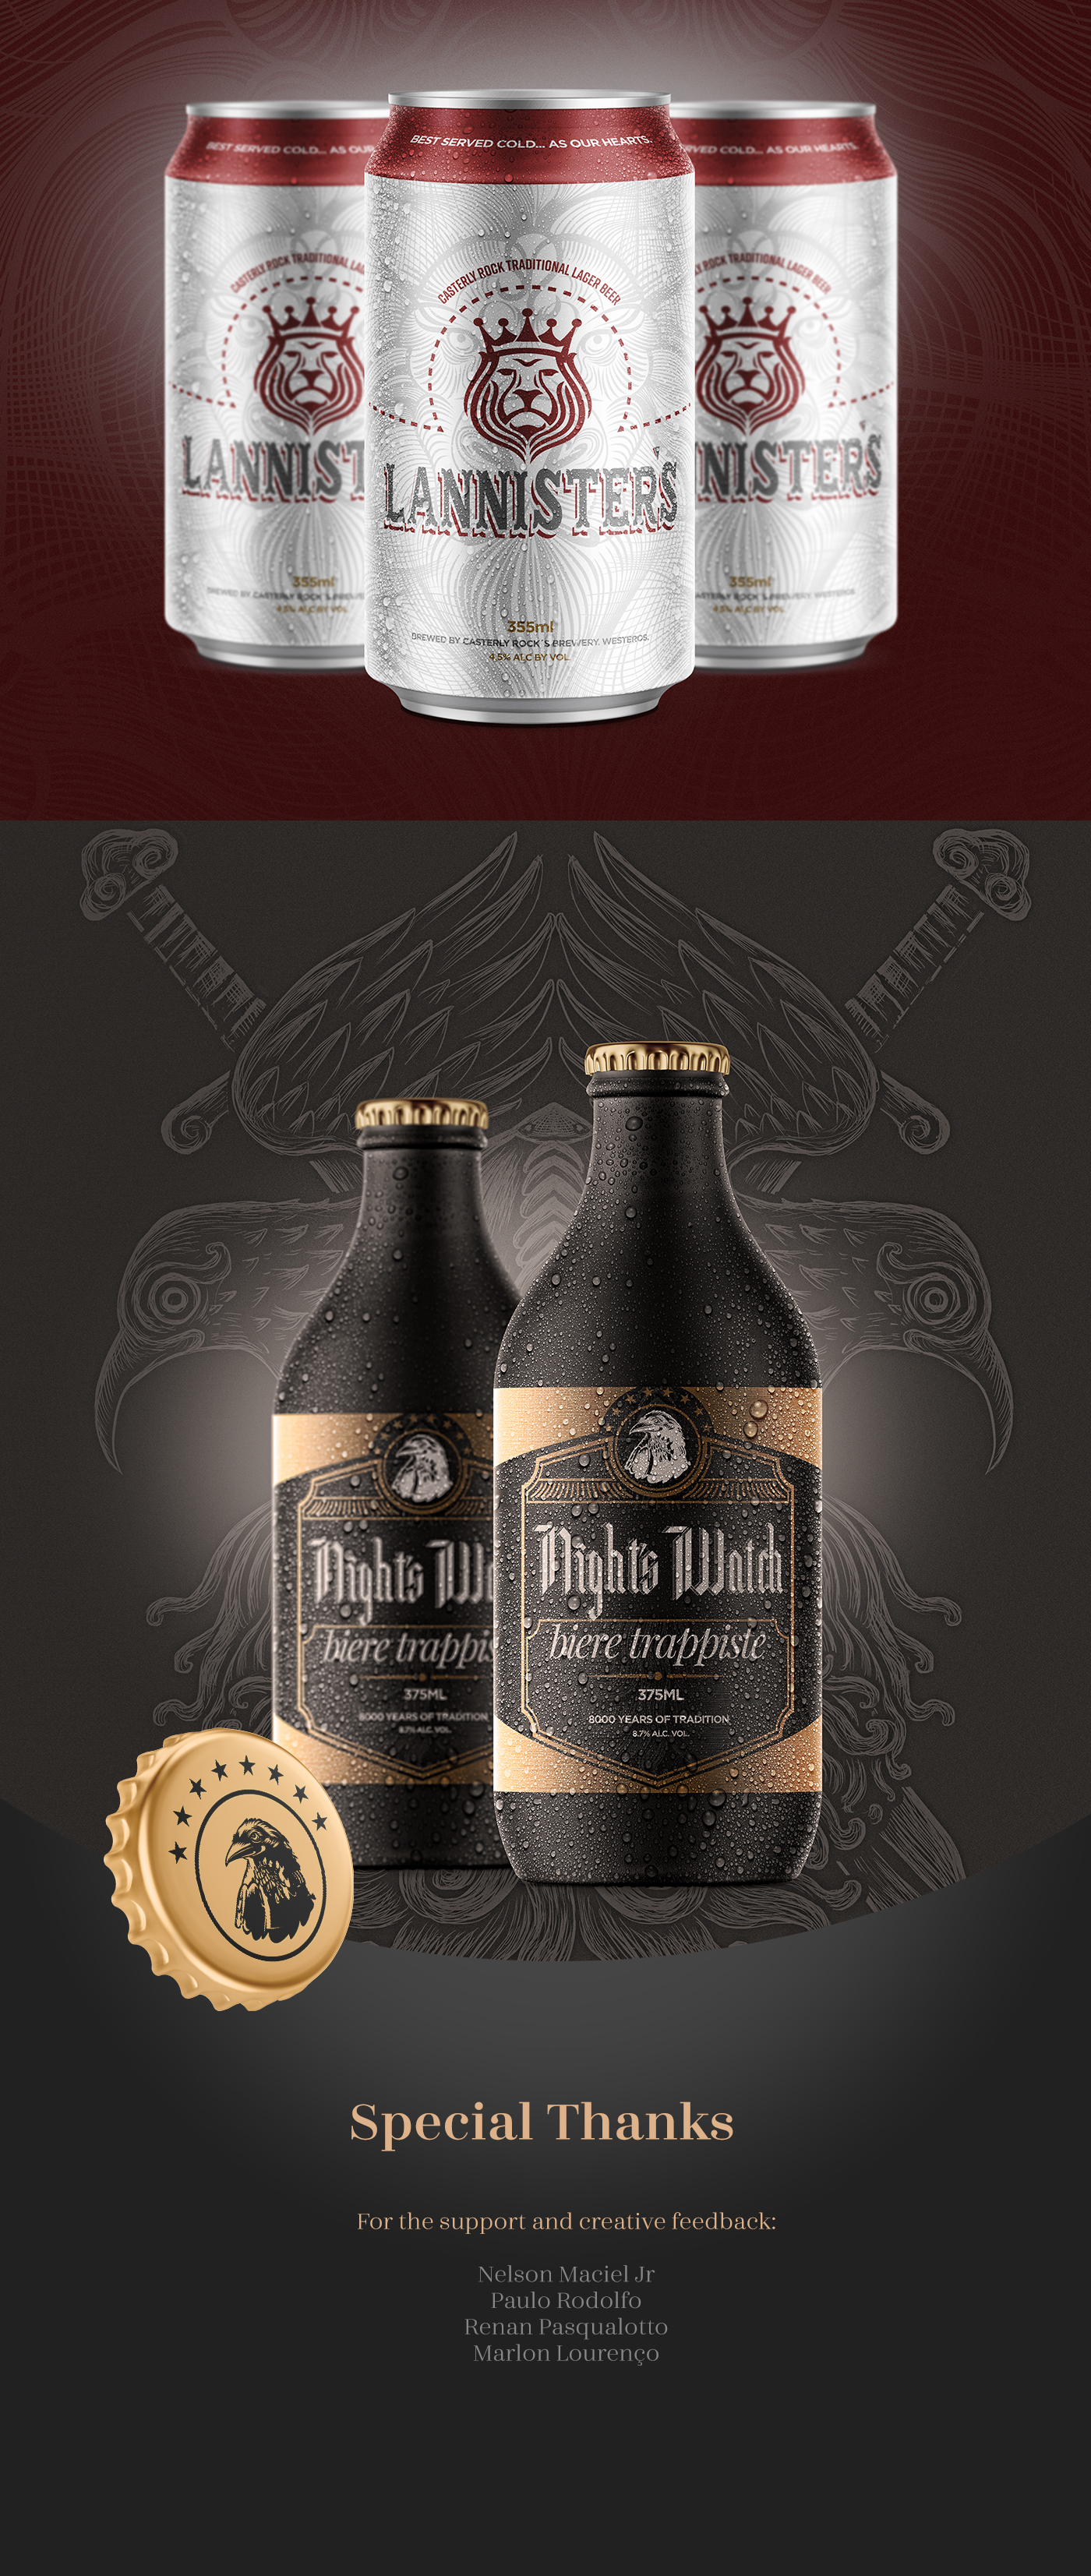 Game of Thrones beers Label Packaging Westeros embalagem hbo can bottle